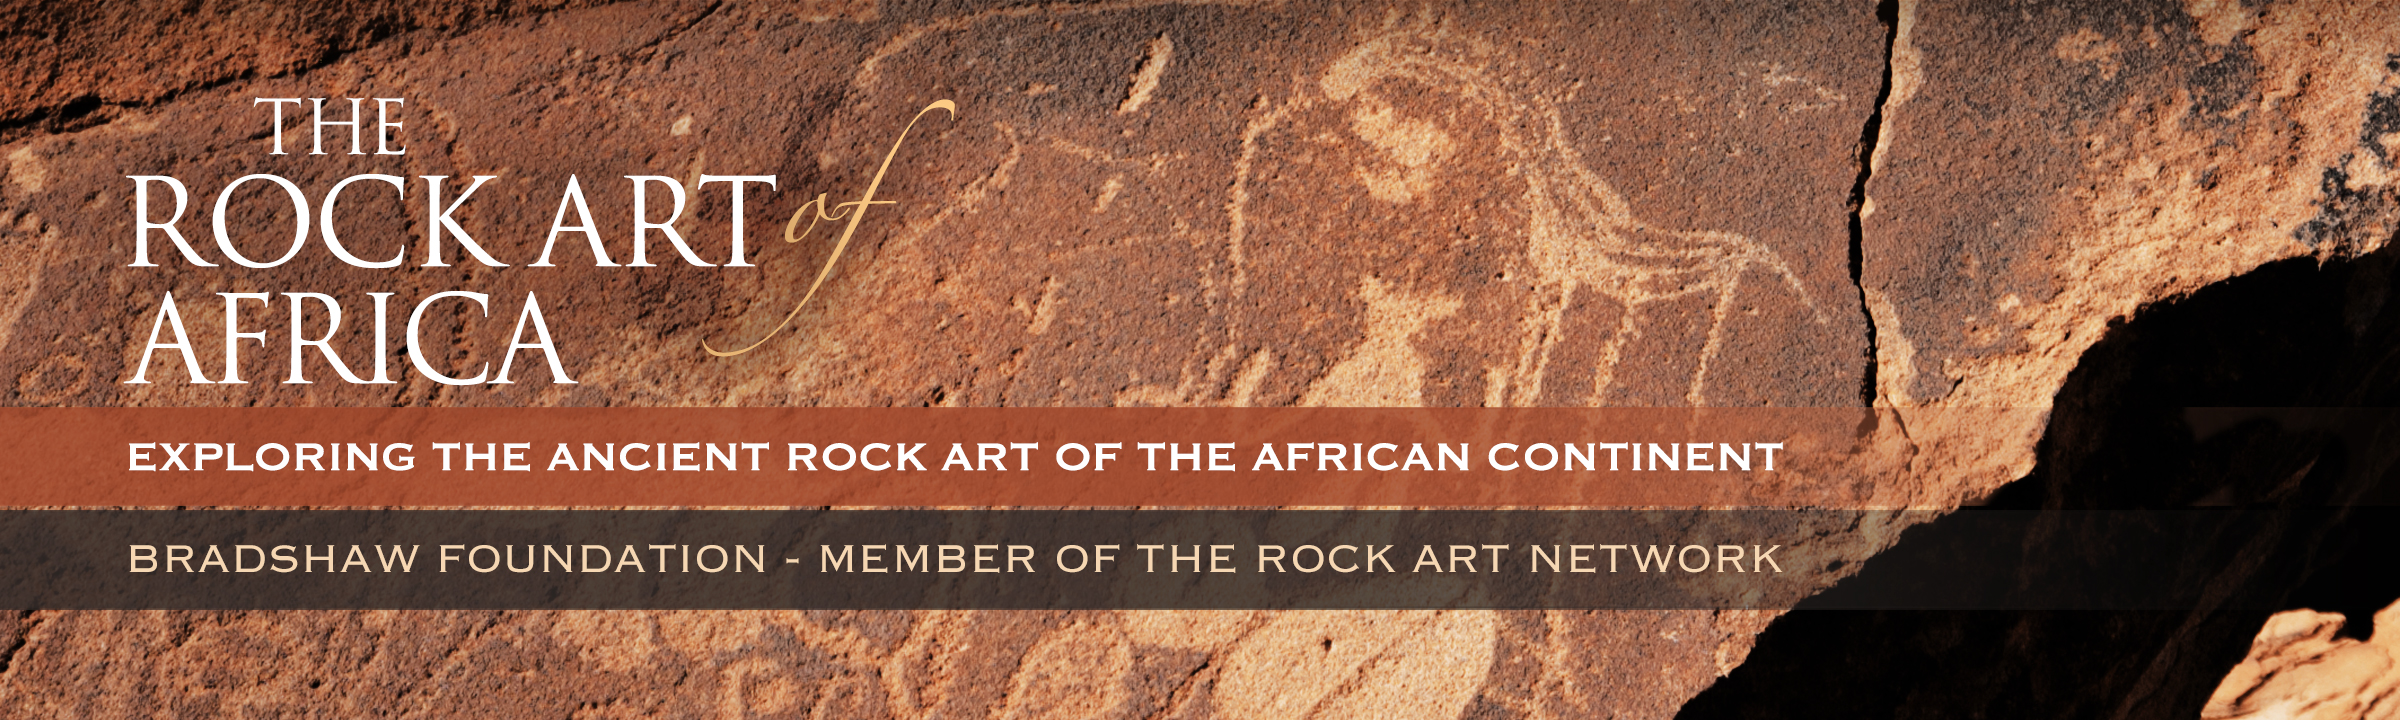 Rock Art Bradshaw Foundation Africa African RockArt Petroglyphs Petroglyph Archaeology Prehistory